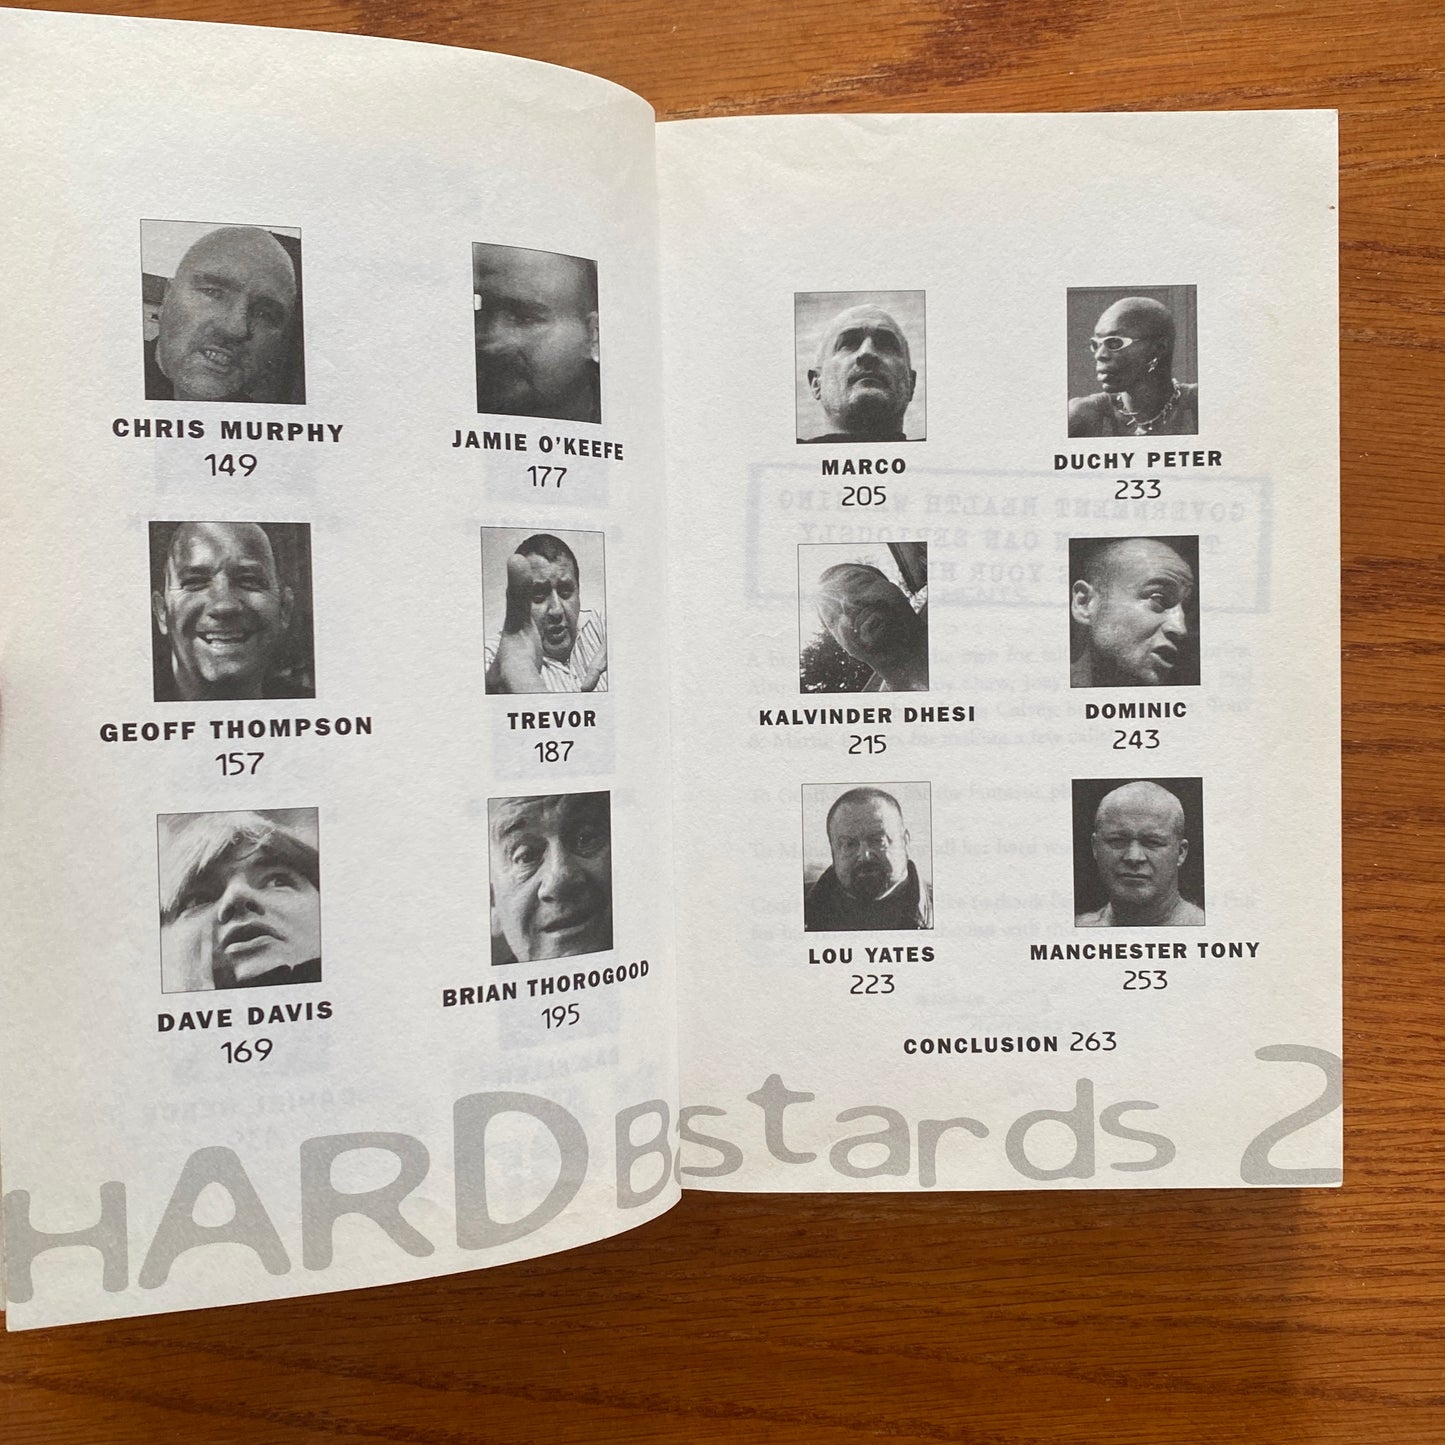 Hard Bastards 2 - Kate Kray